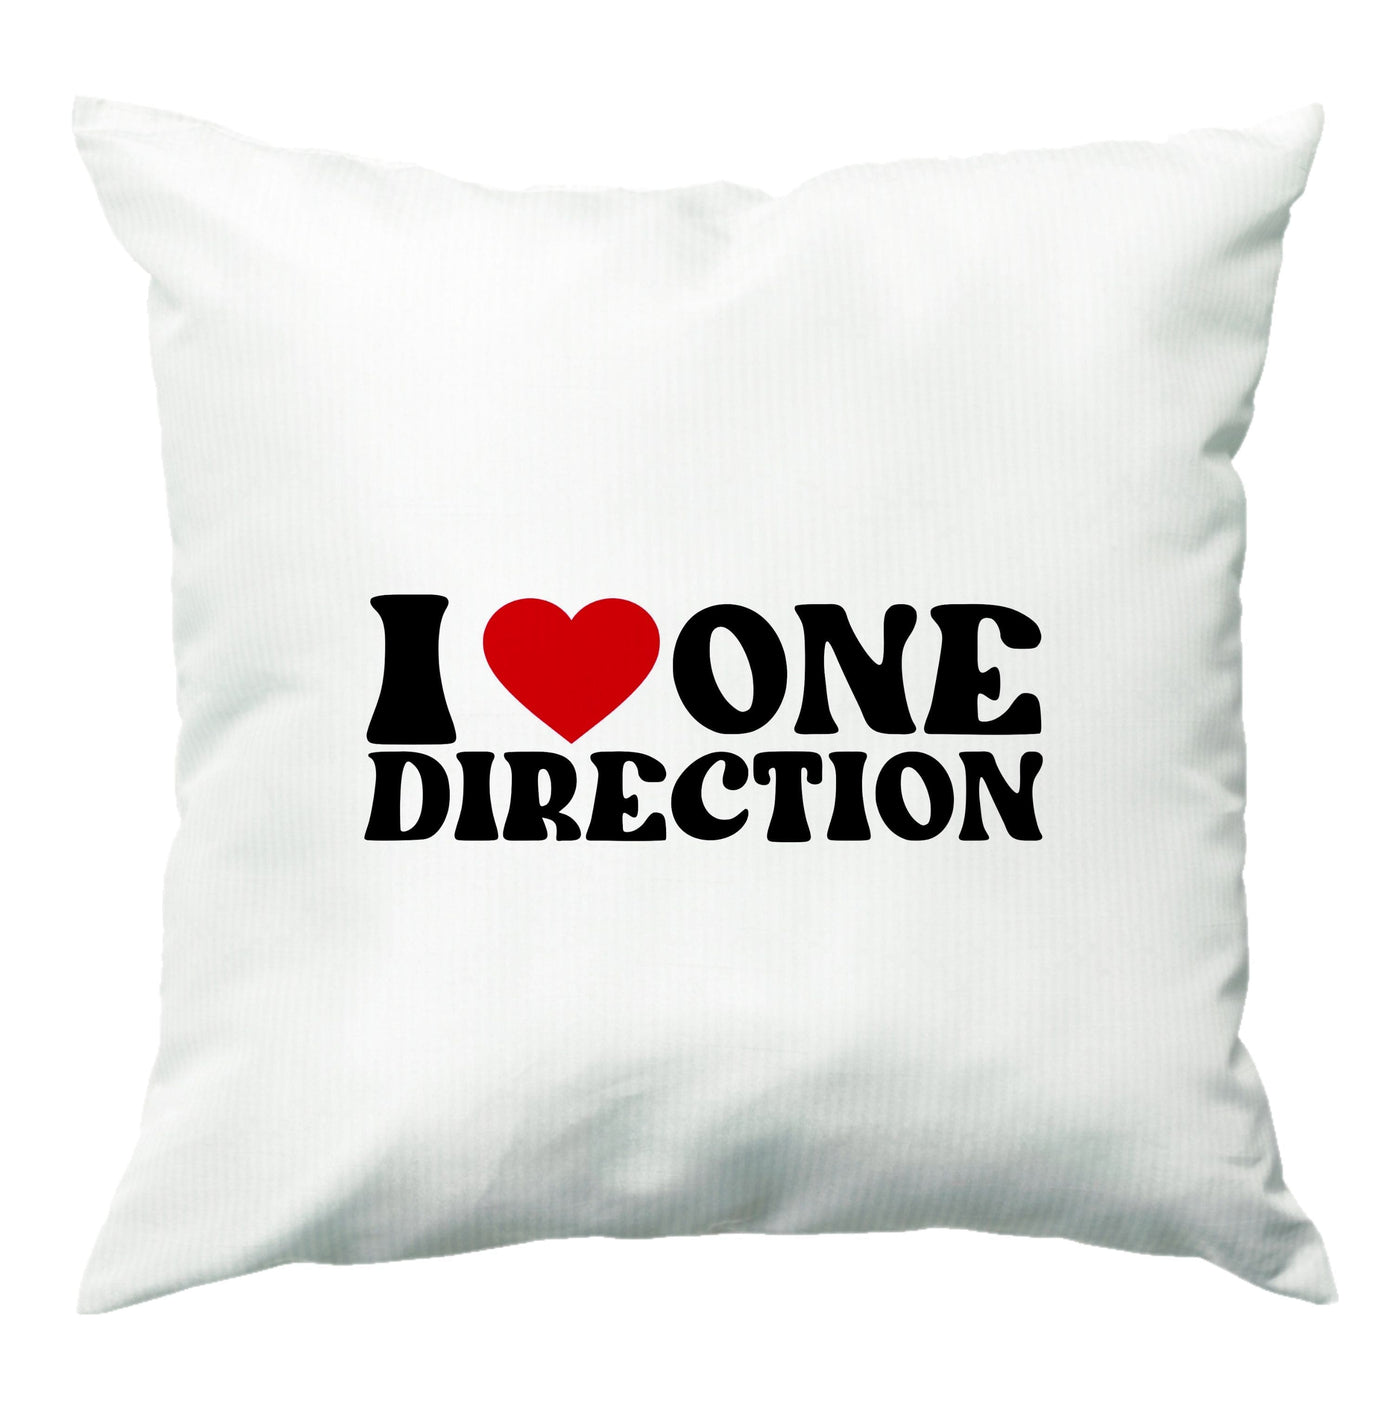 I Love One Direction Cushion